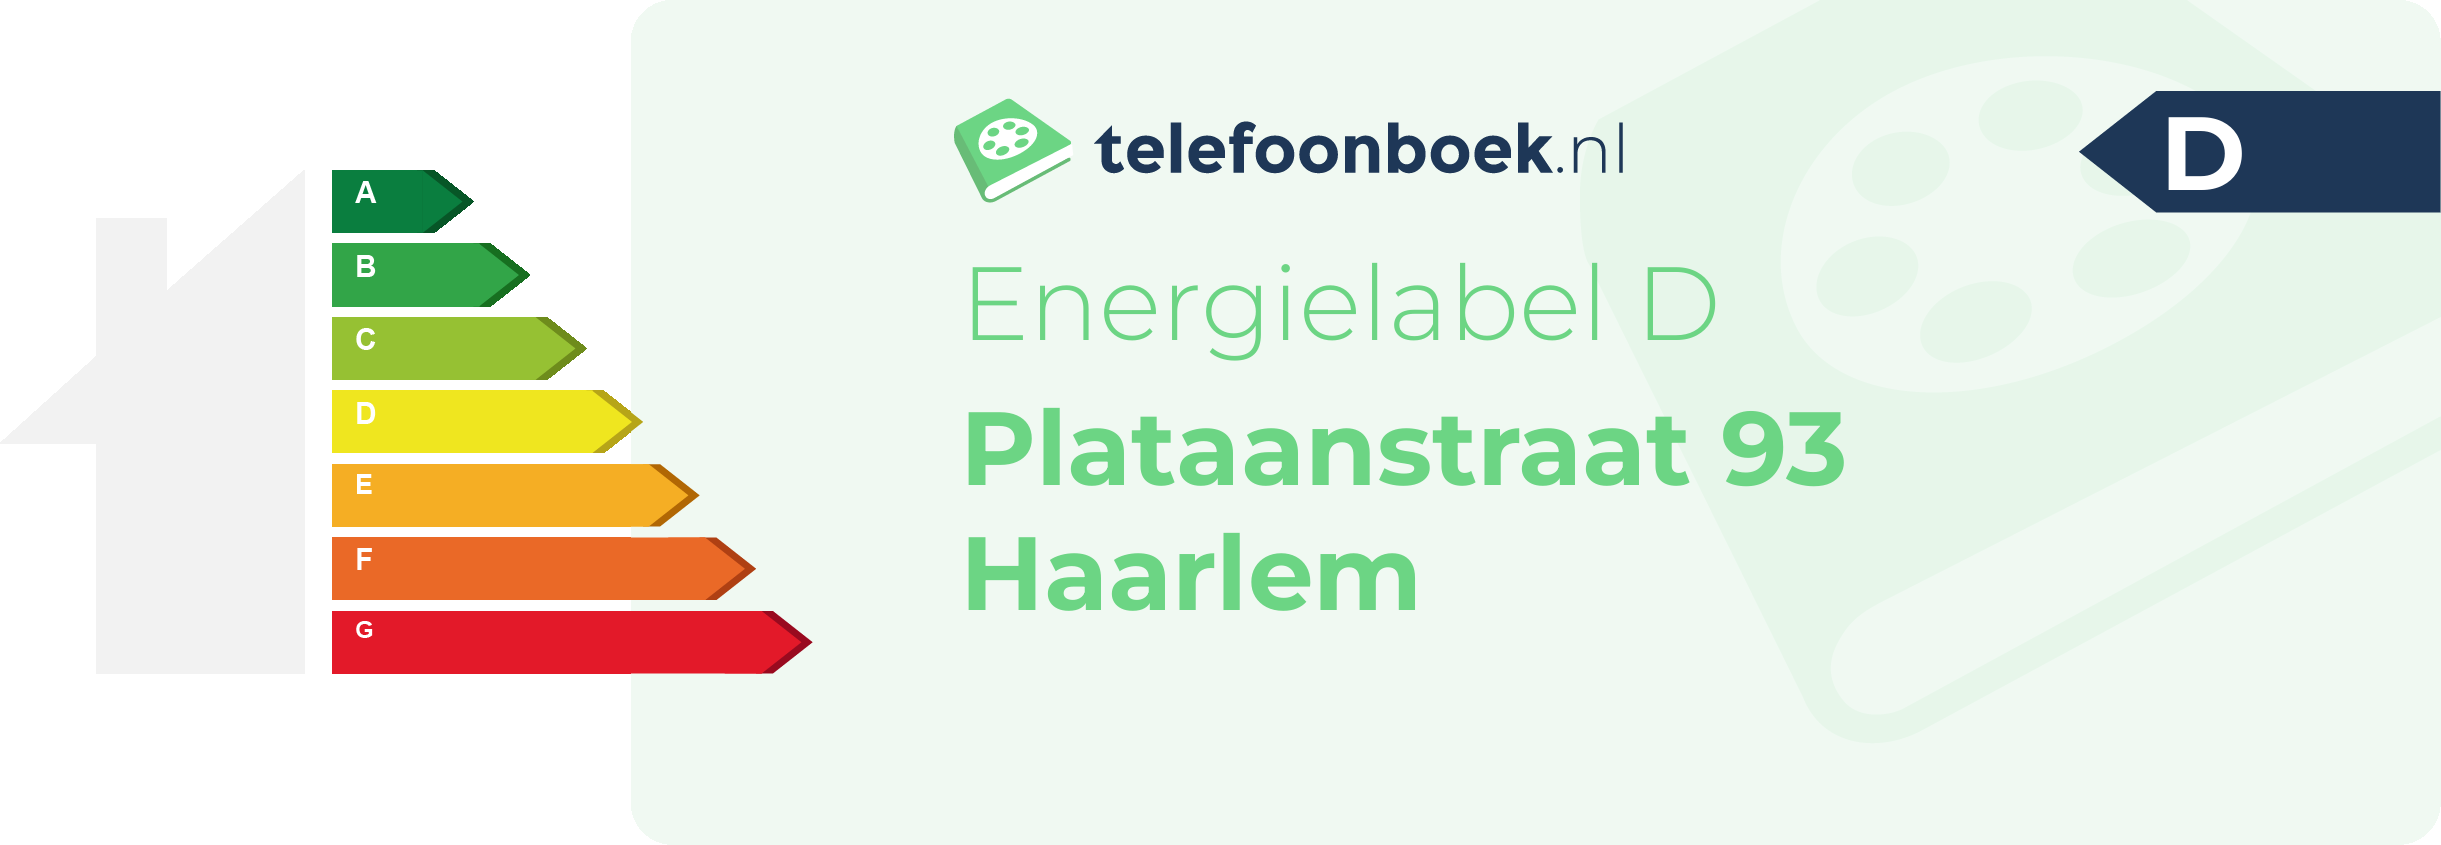 Energielabel Plataanstraat 93 Haarlem